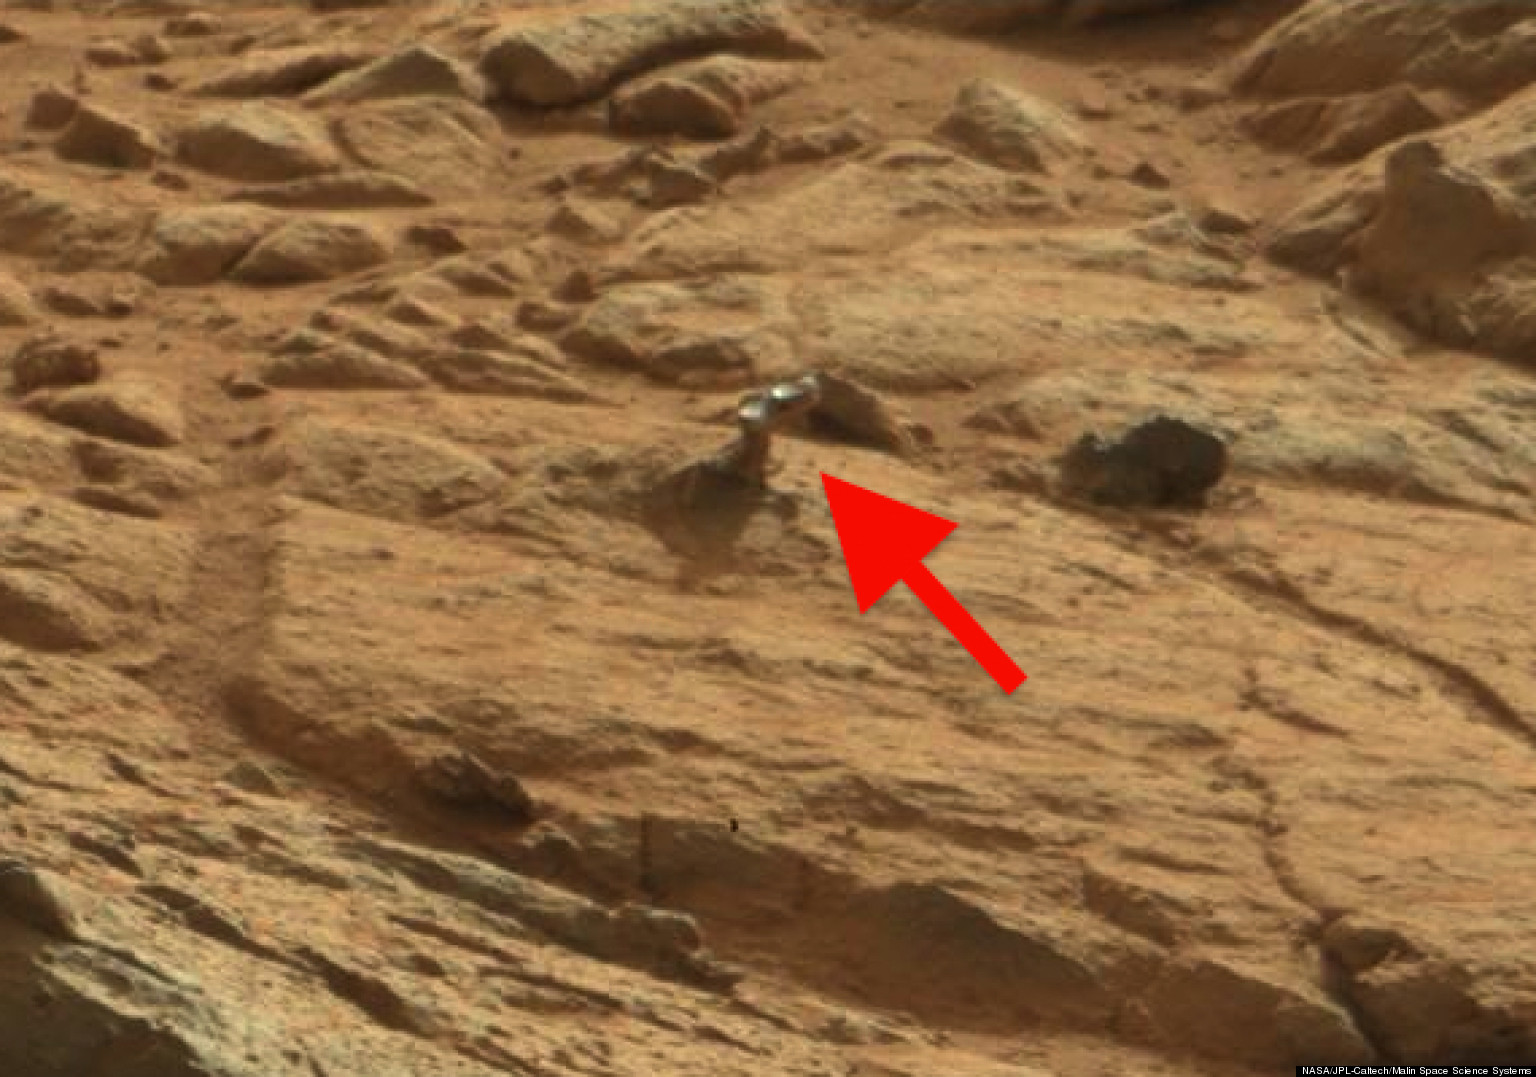 Metal On Mars Shiny Object Seen By Curiosity Rover Explained Nasa